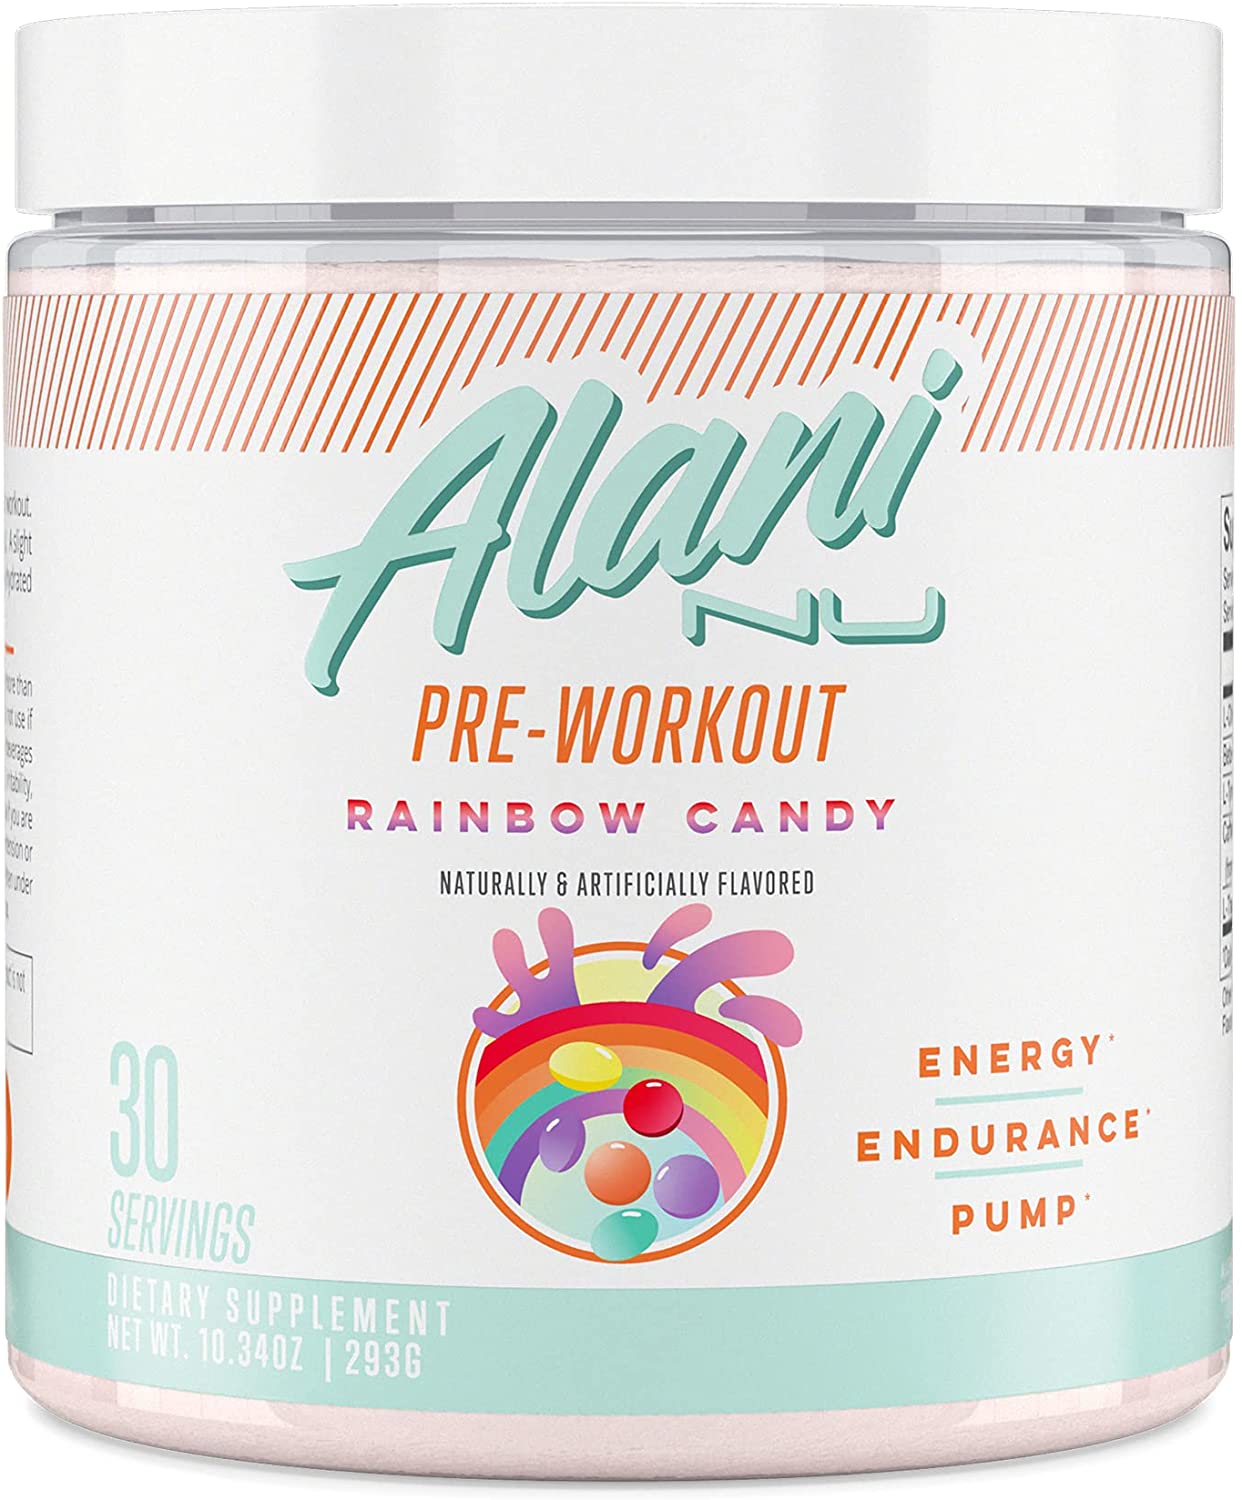 Alani Nu Pre-Workout - Energy, Endurance, Pump